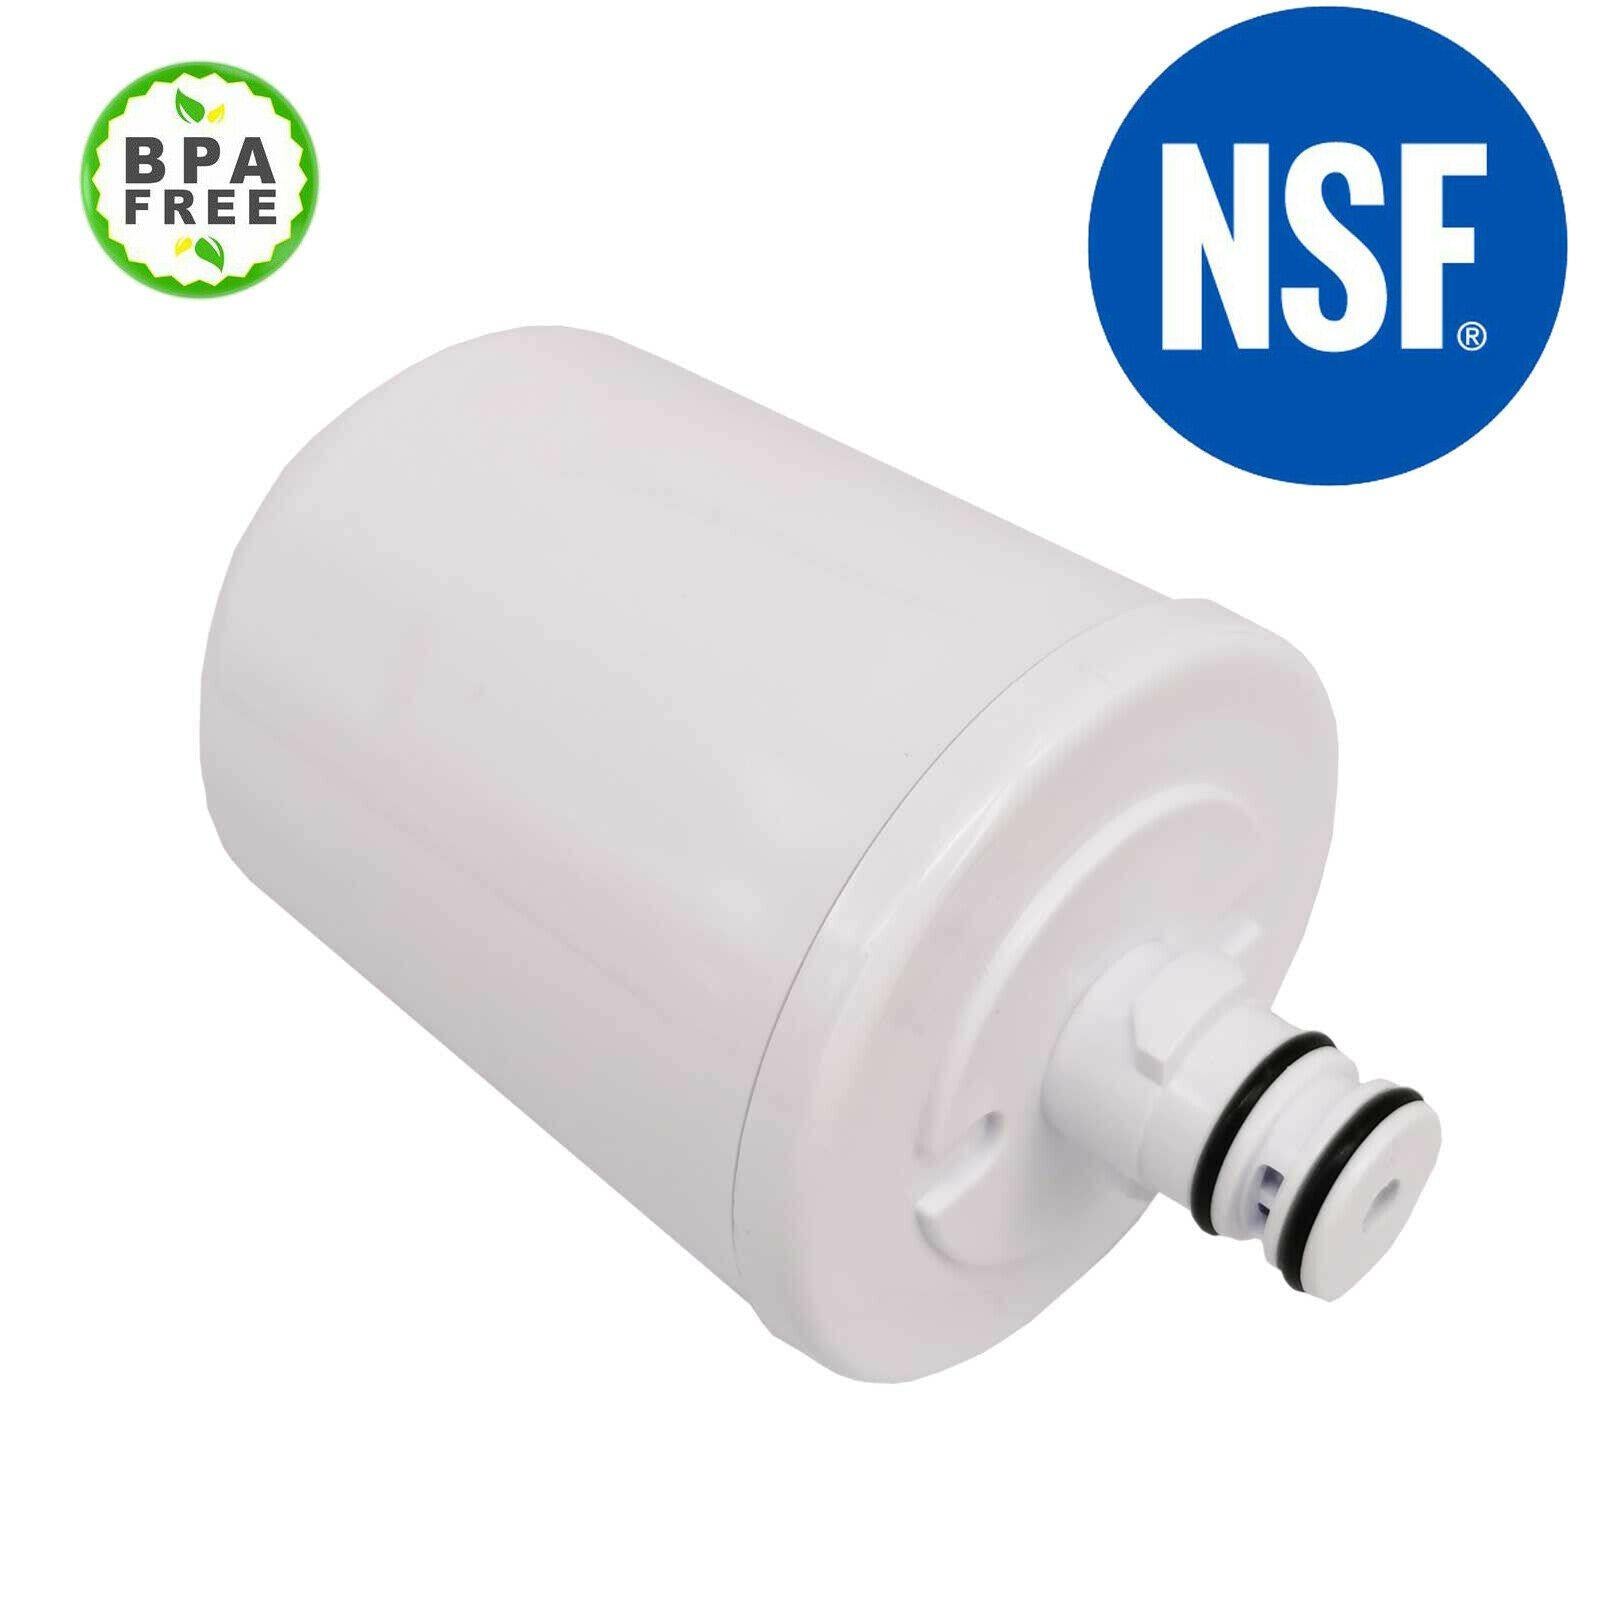 Fridge Refrigerator Water Filter Compatible For LG LT500P Kenmore 46-9890 469890 Sparesbarn